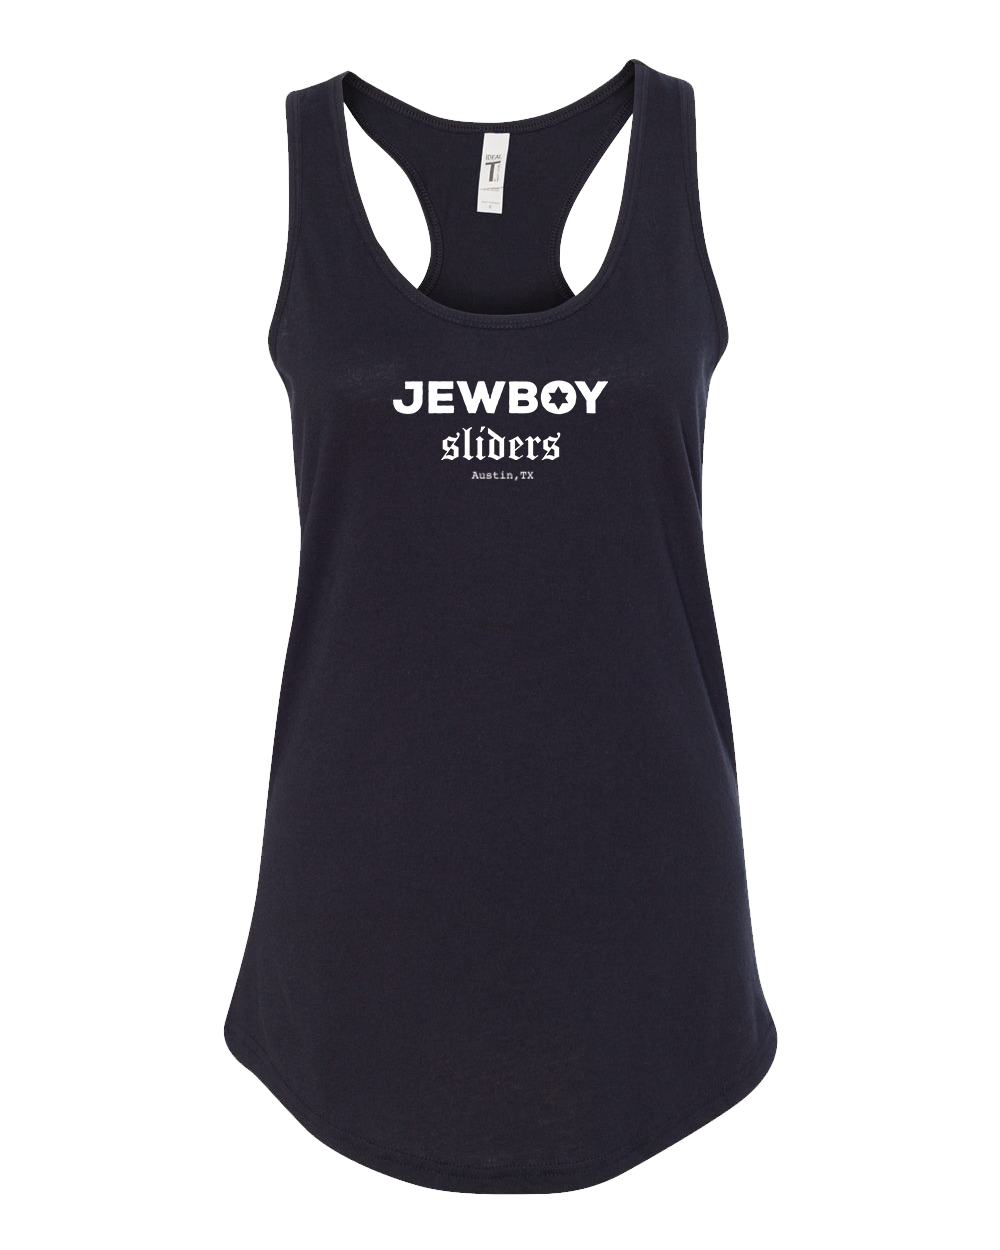 JewBoy Sliders Women's Tank Top